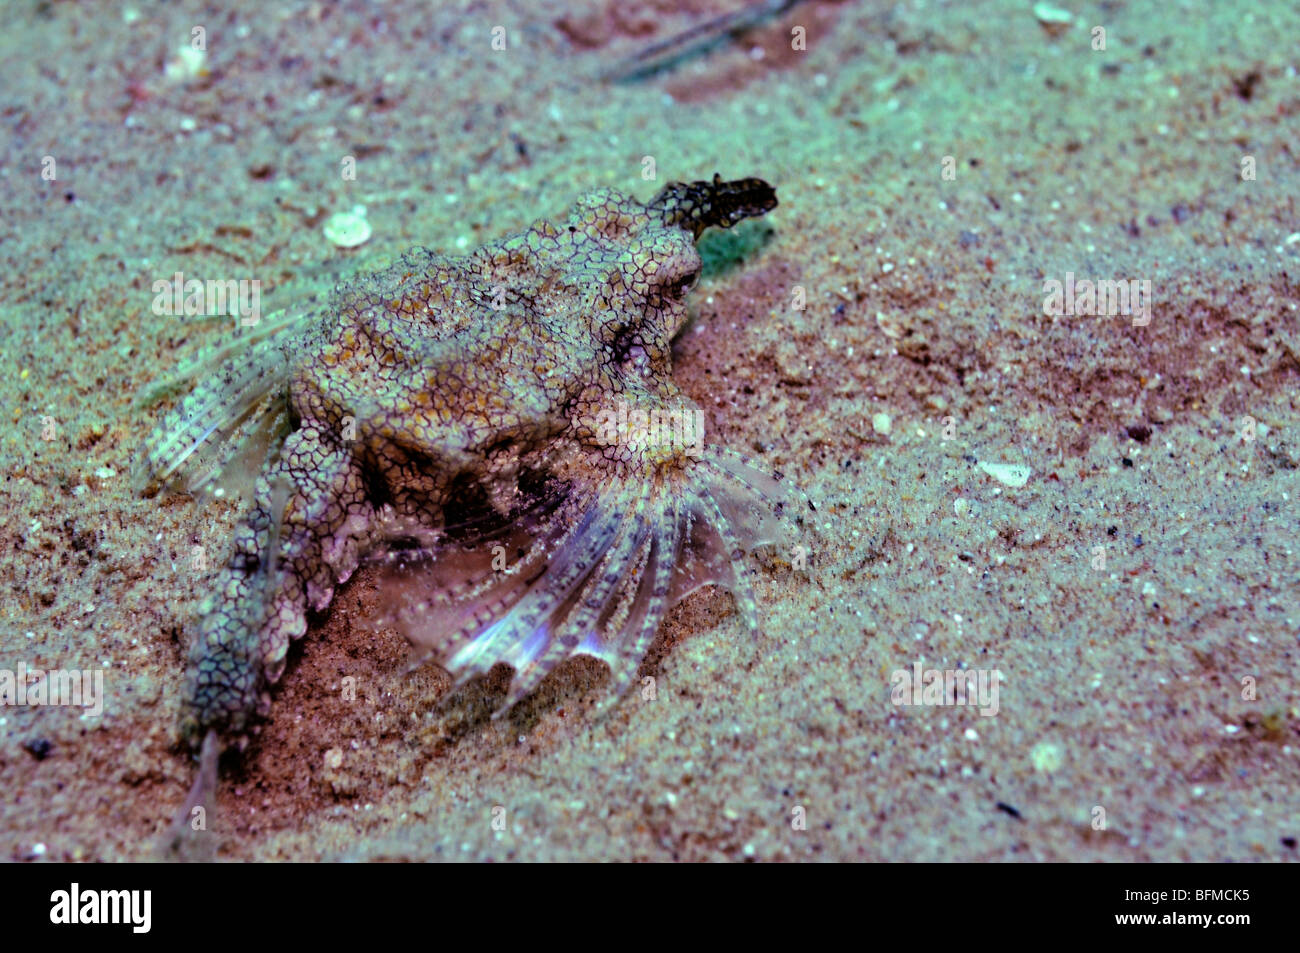 'Sea moth' or little dragonfish, Eurypegasus draconis. 'Red Sea' Stock Photo